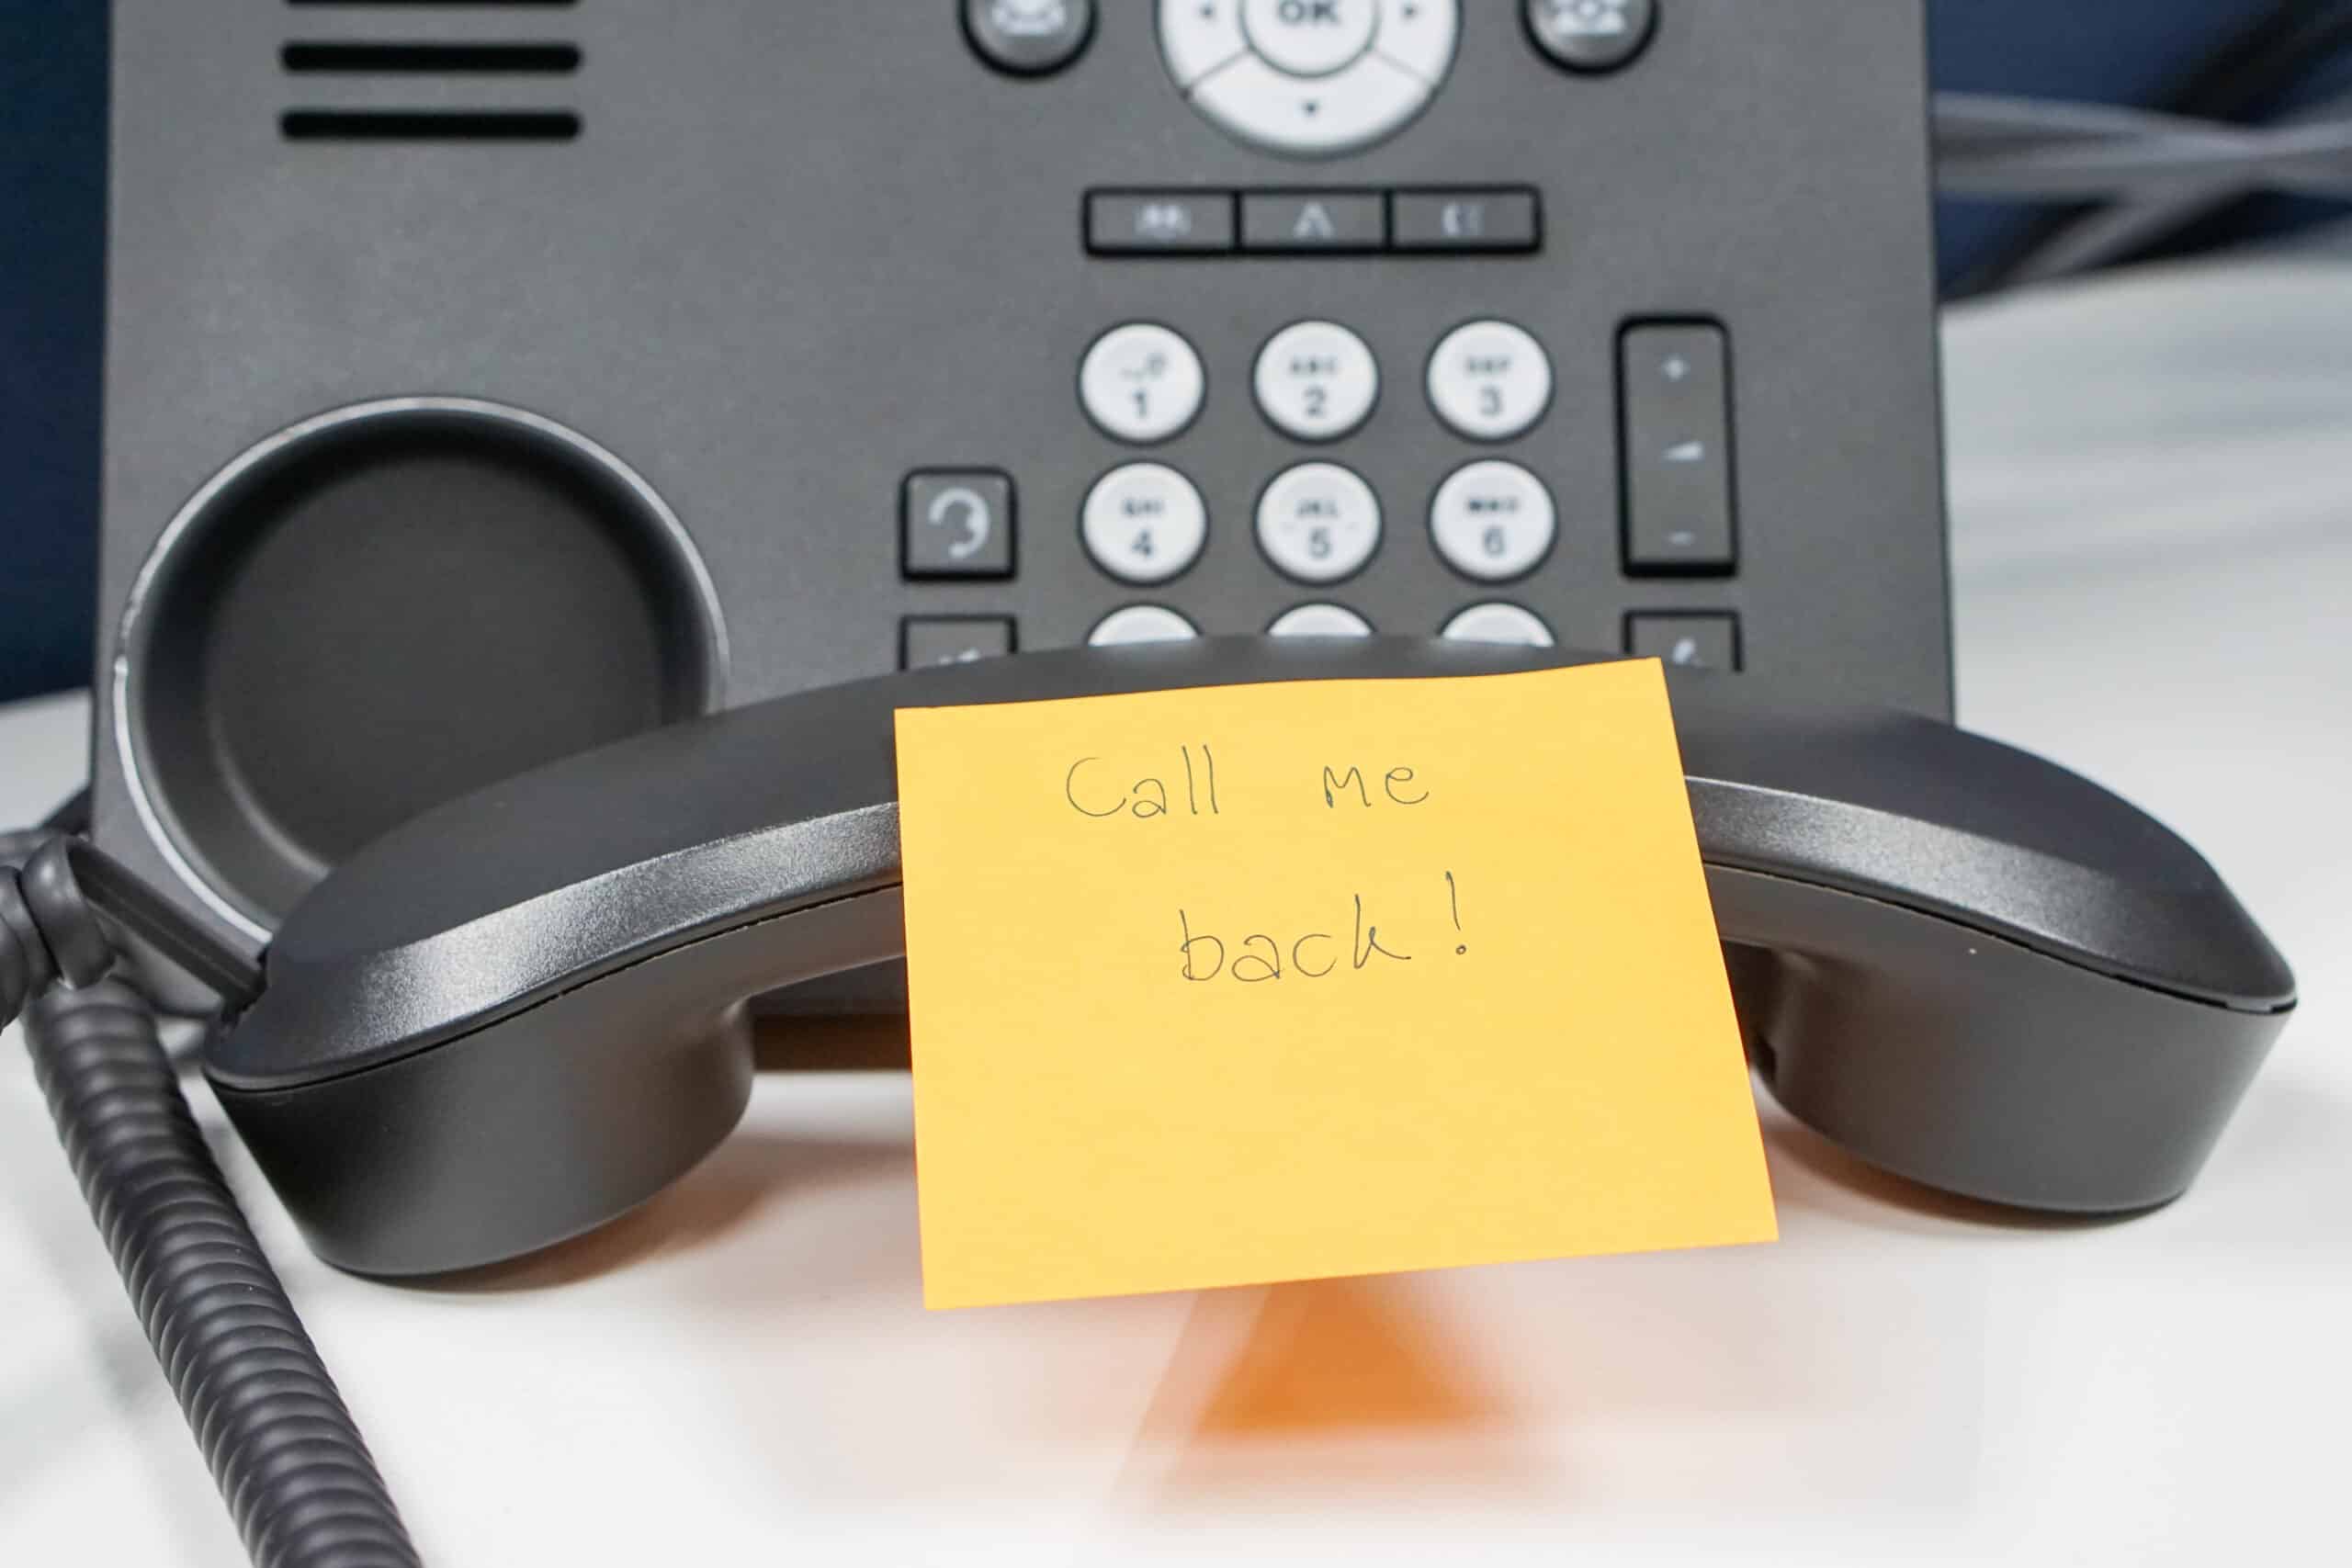 Call them back. Call back. Calling back. Back Calls 1с. To Call back.